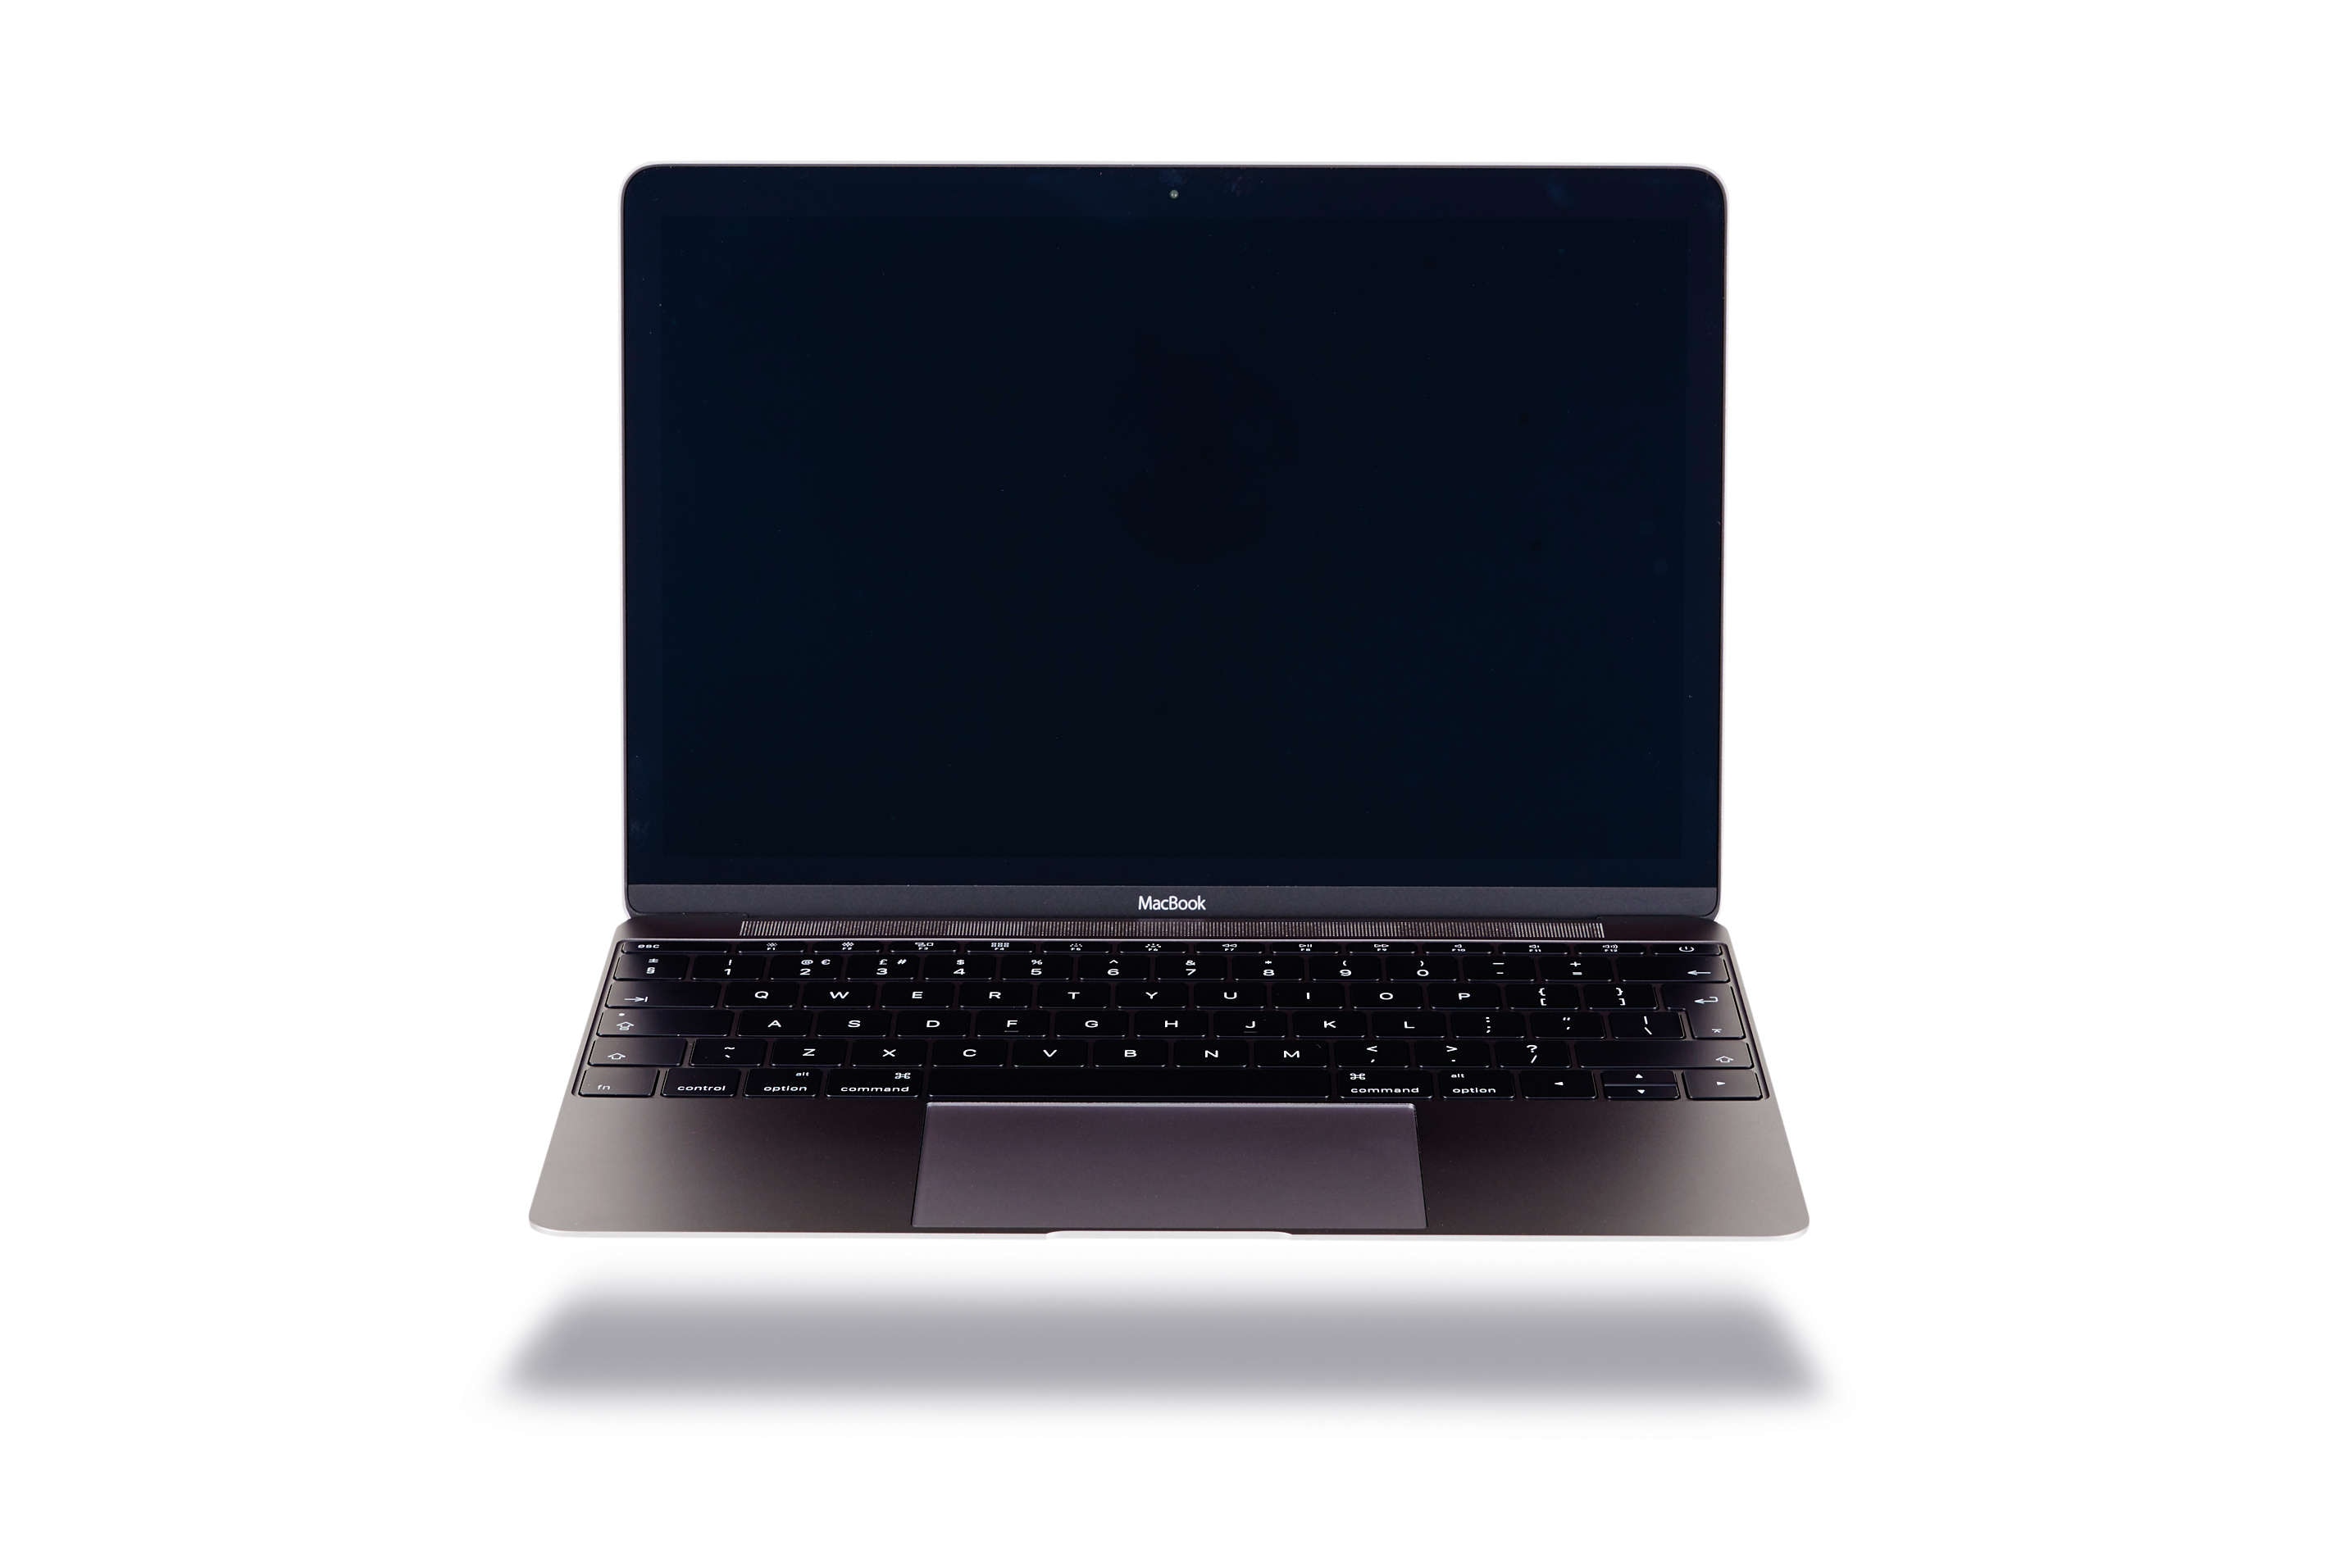 Apple MacBook laptop